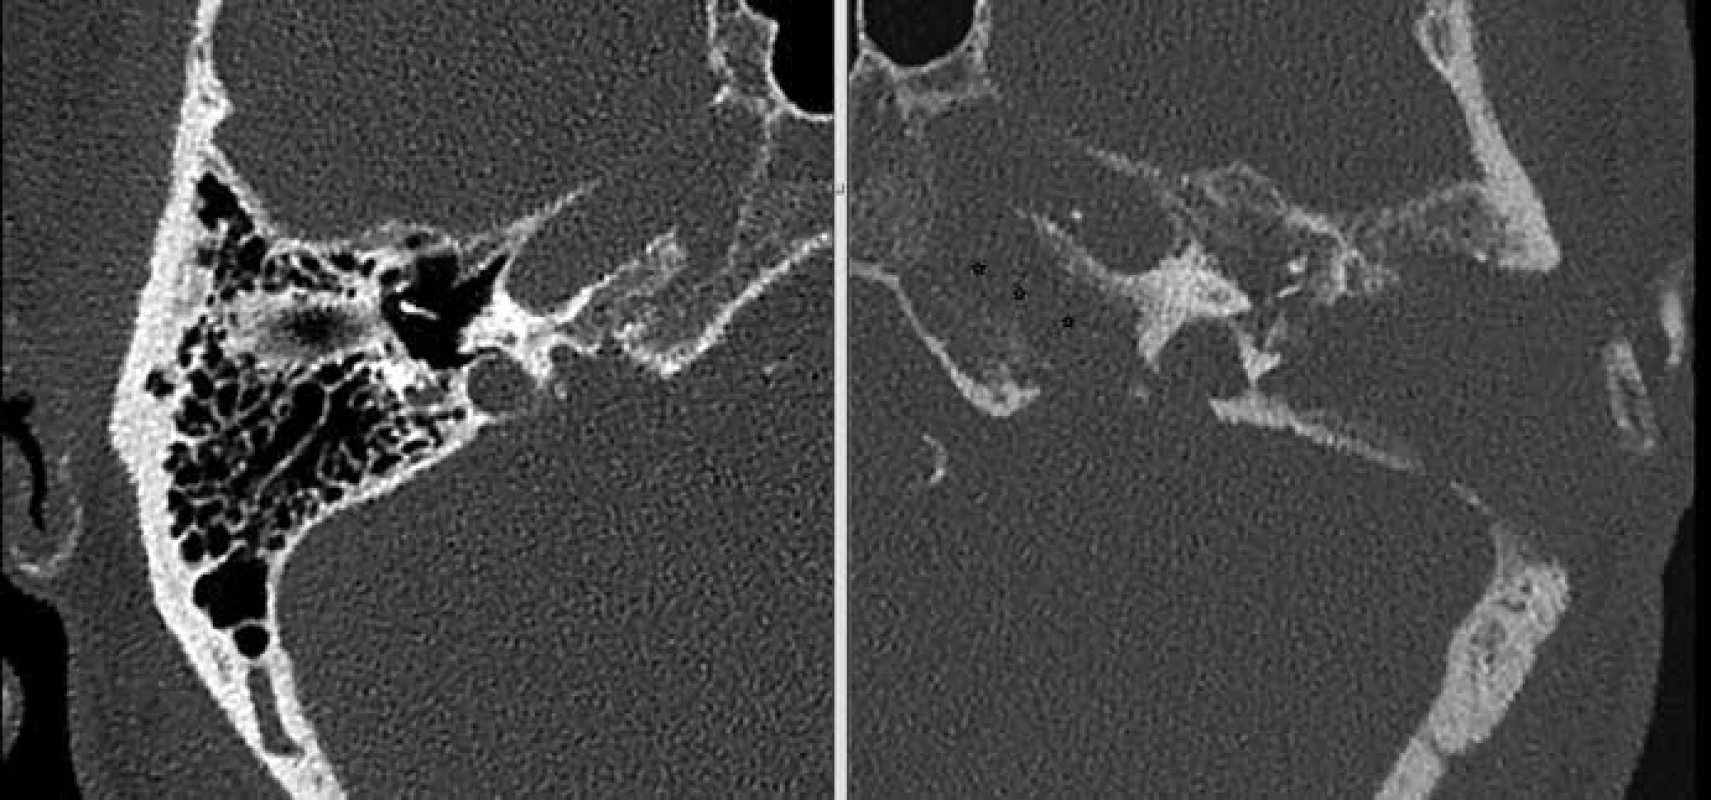 Kazuistika 1 – CT spánkových kostí axiální řezy, stav po antromastoidektomii vlevo.
Osteolytické změny hrotu pyramidy (hvězdičky).